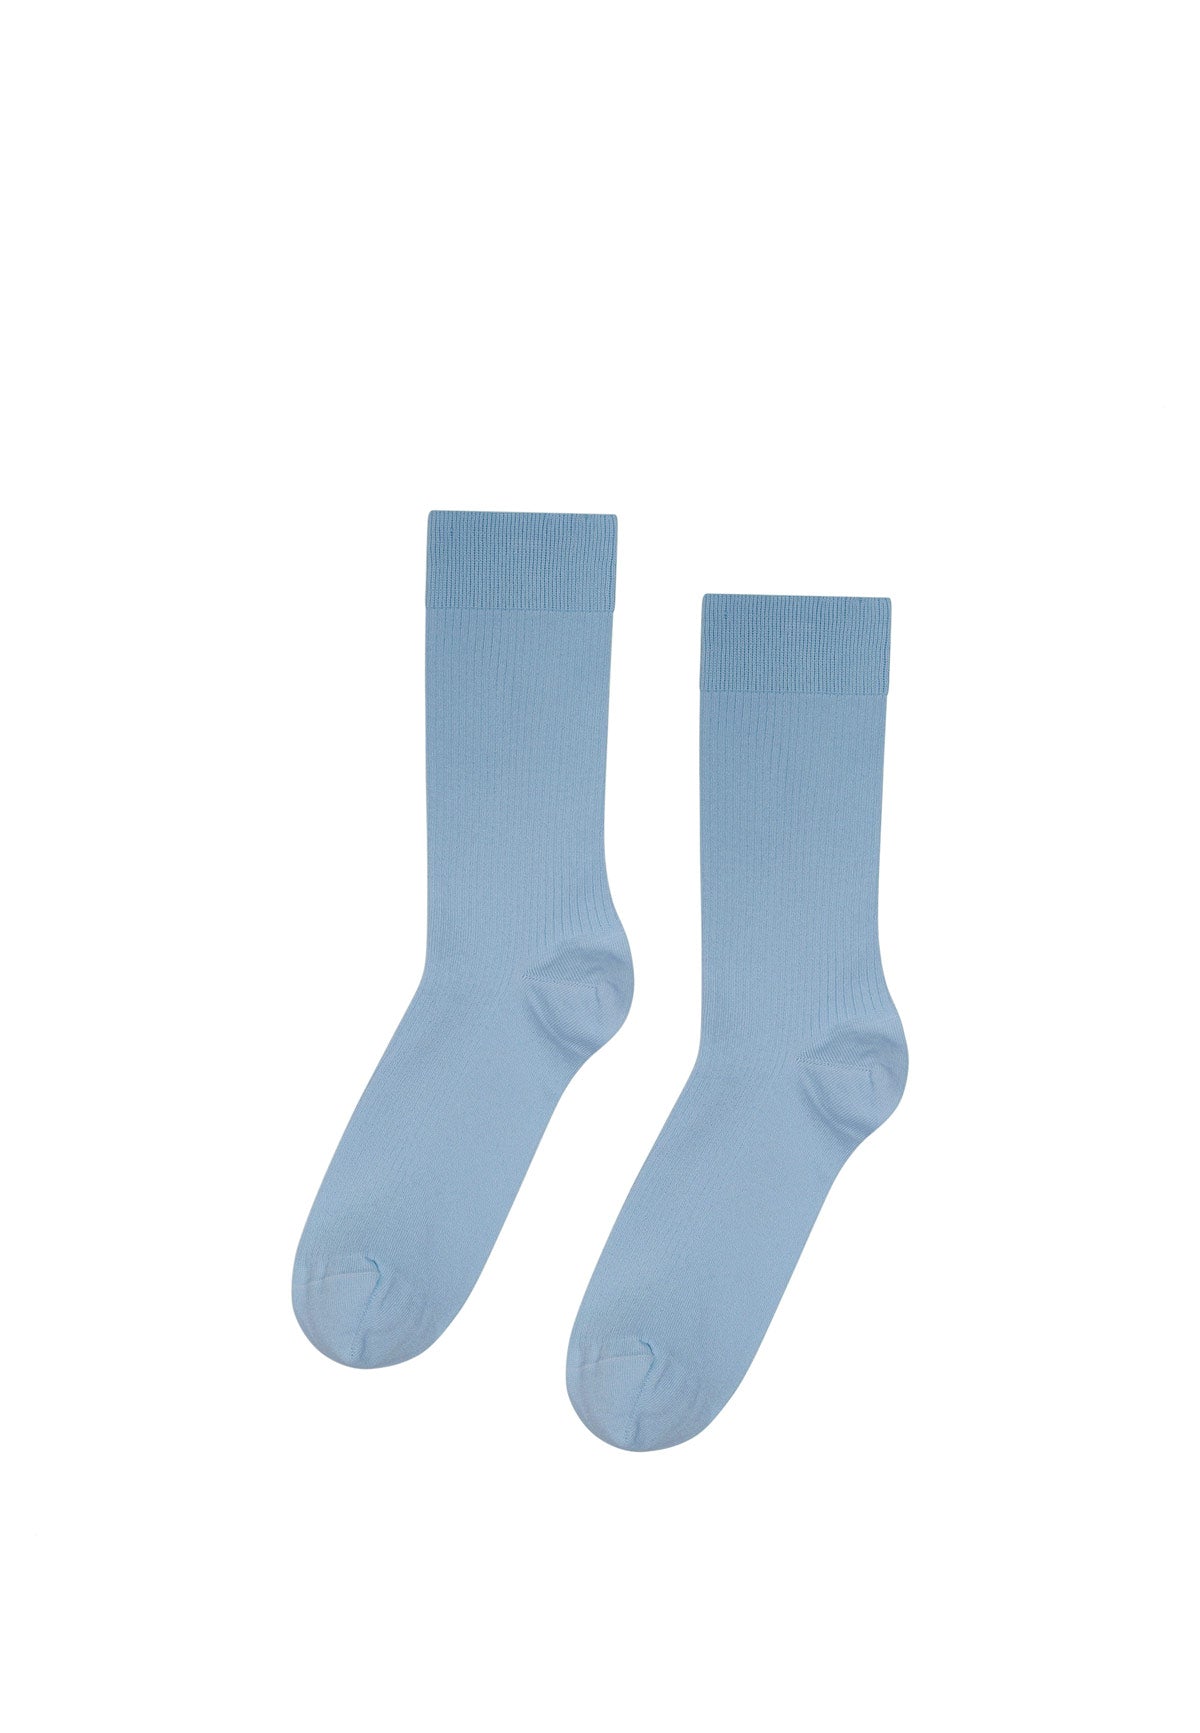 MEN'S ORGANIC COTTON SOCKS STEEL BLUE